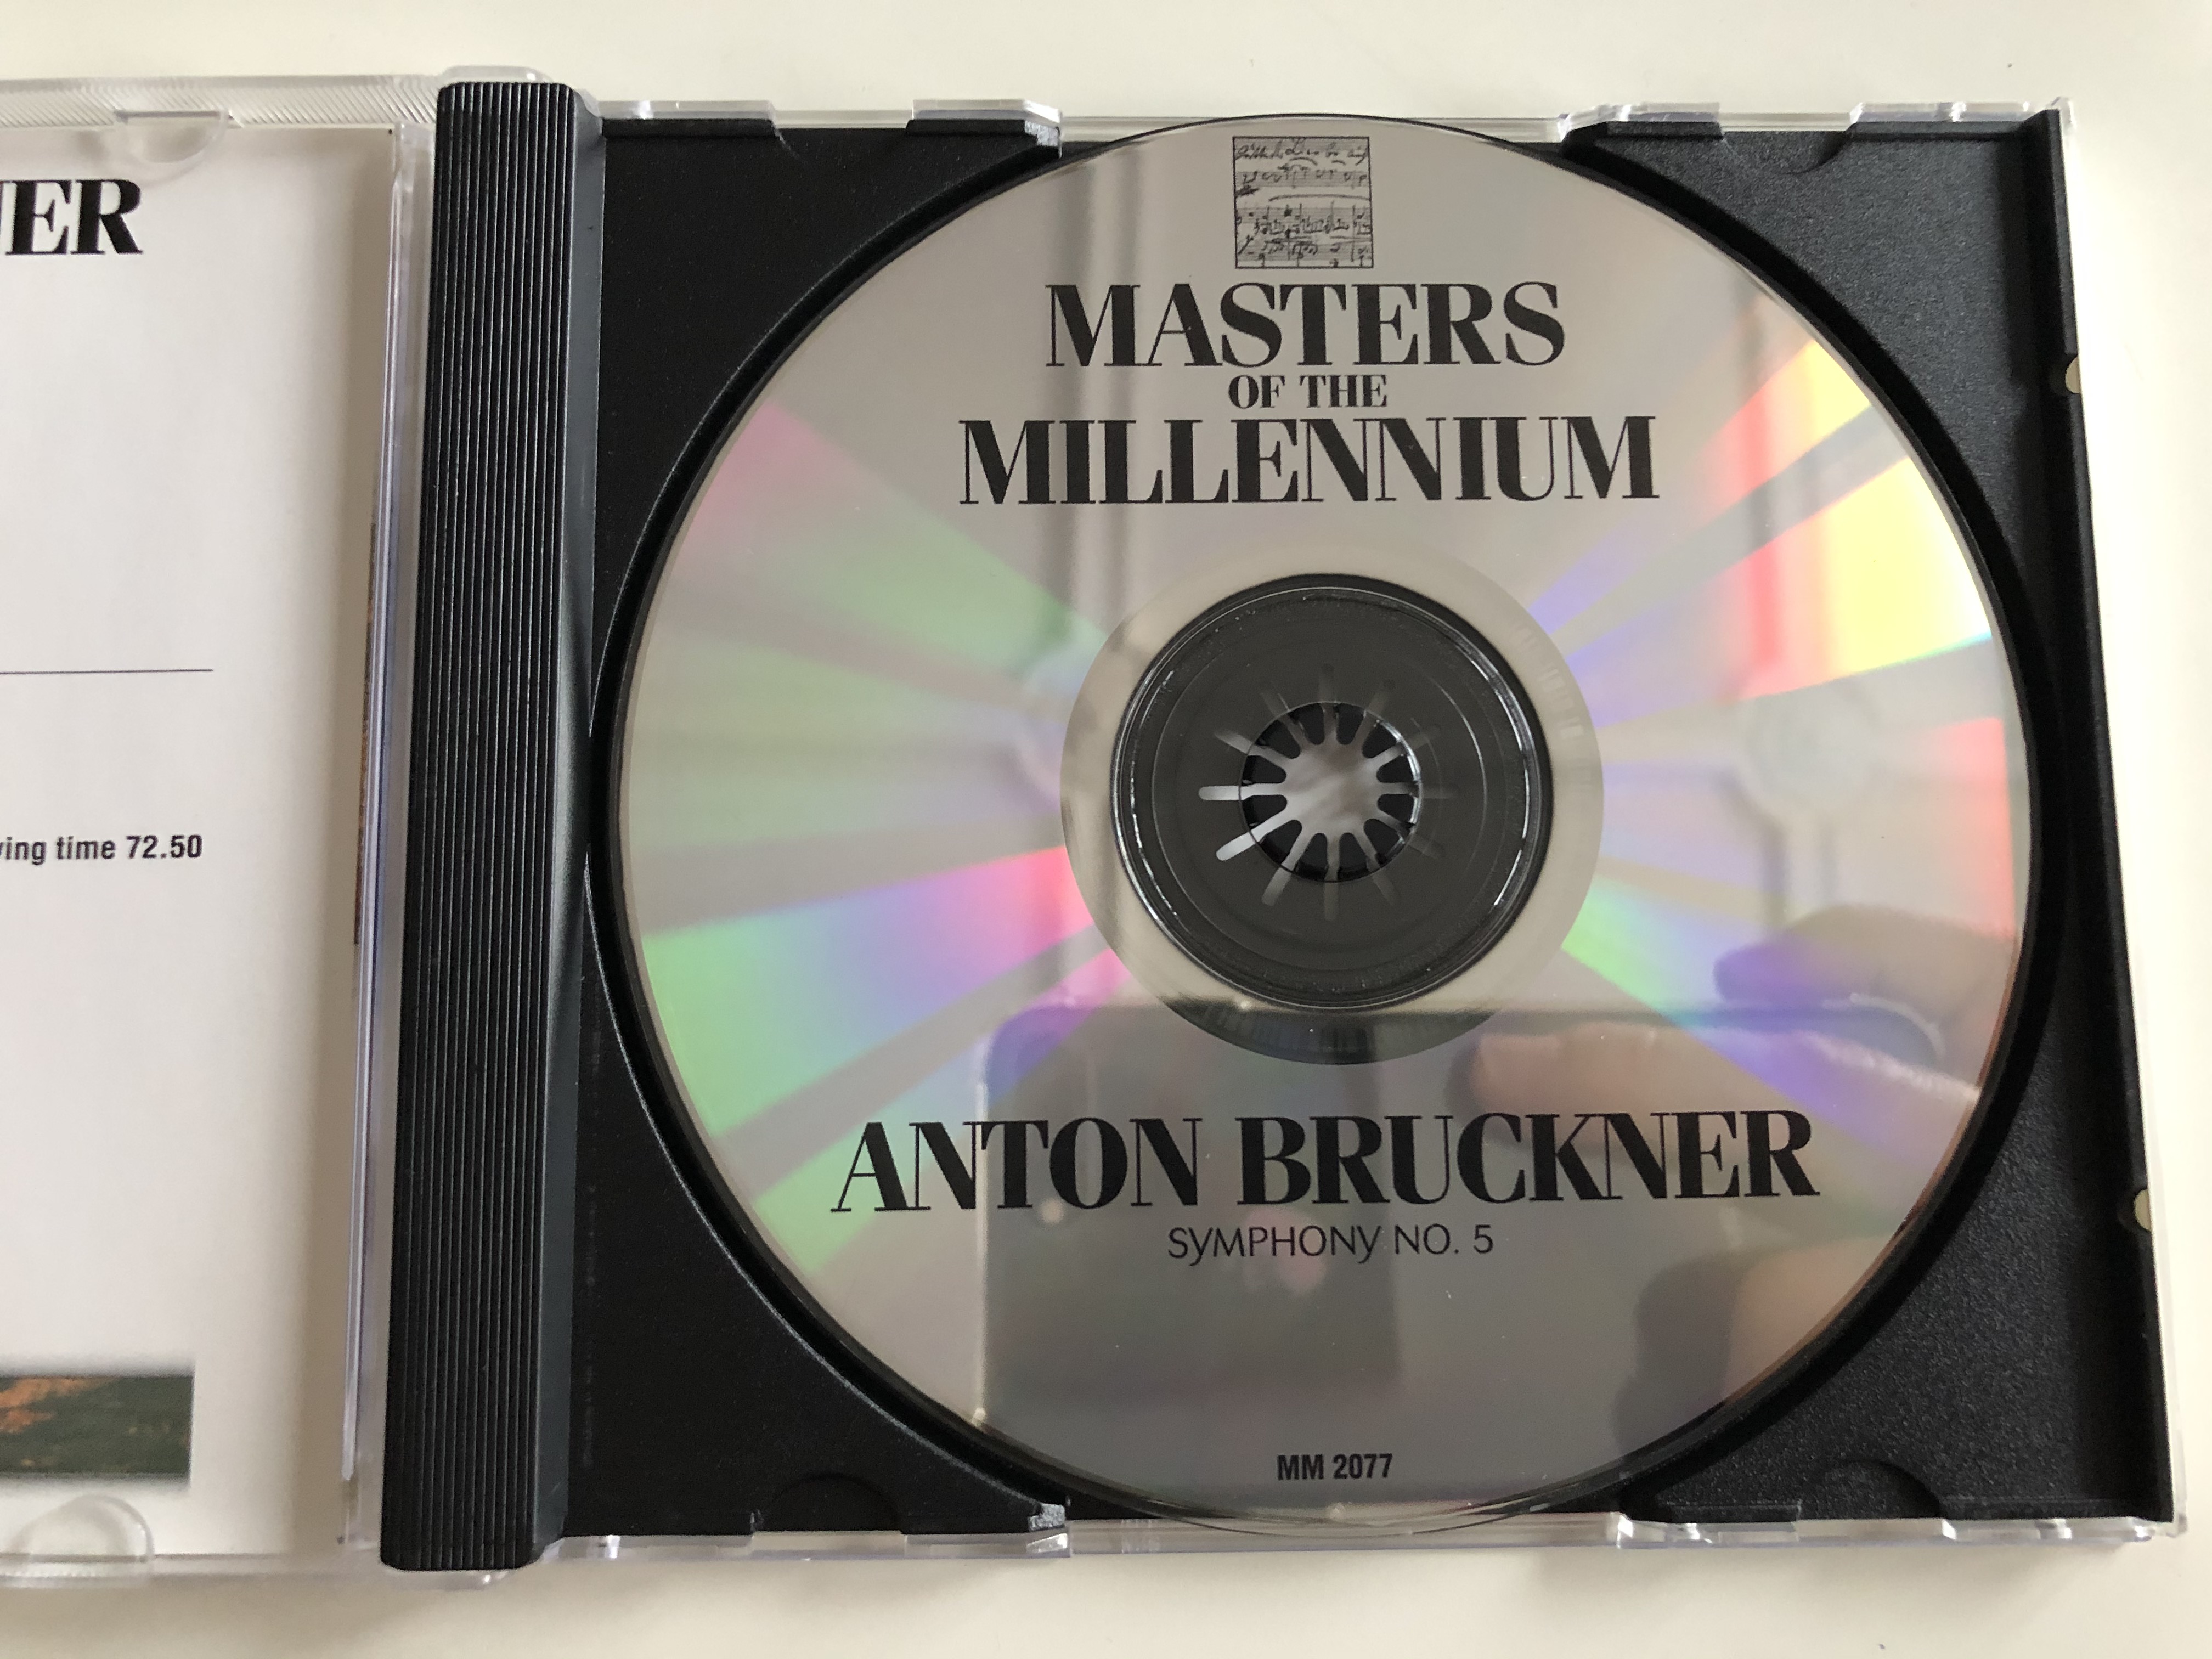 anton-bruckner-symphony-no.-5-masters-of-the-millennium-audio-cd-1999-mm-2077-3-.jpg